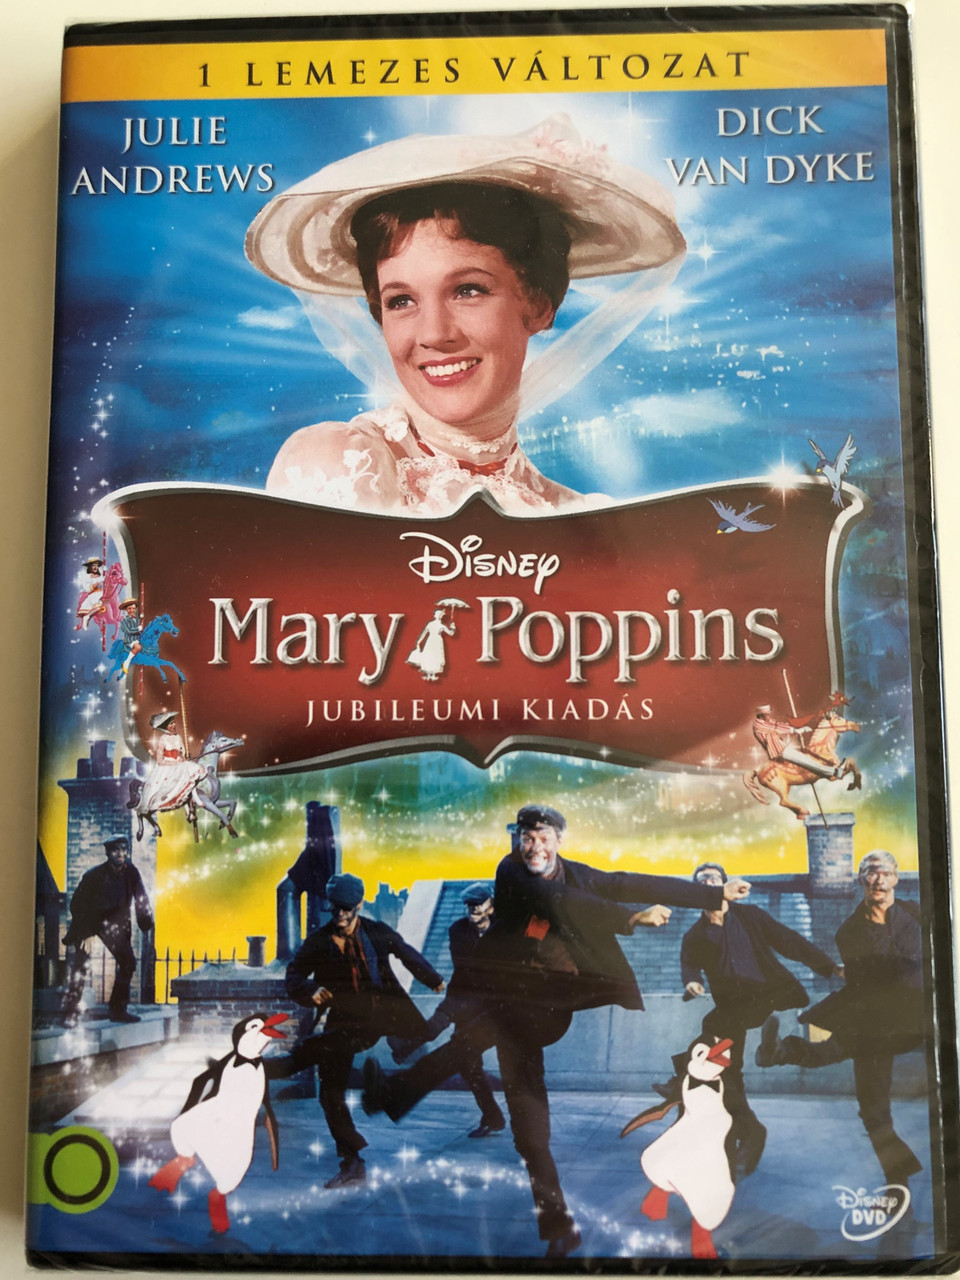 Mary Poppins DVD 1964 Jubileumi kiadás / Hungarian Anniversary edition /  Directed by Robert Stevenson / Starring: Julie Andrews, Dick Van Dyke,  David Tomlinson, Glynis Johns - bibleinmylanguage